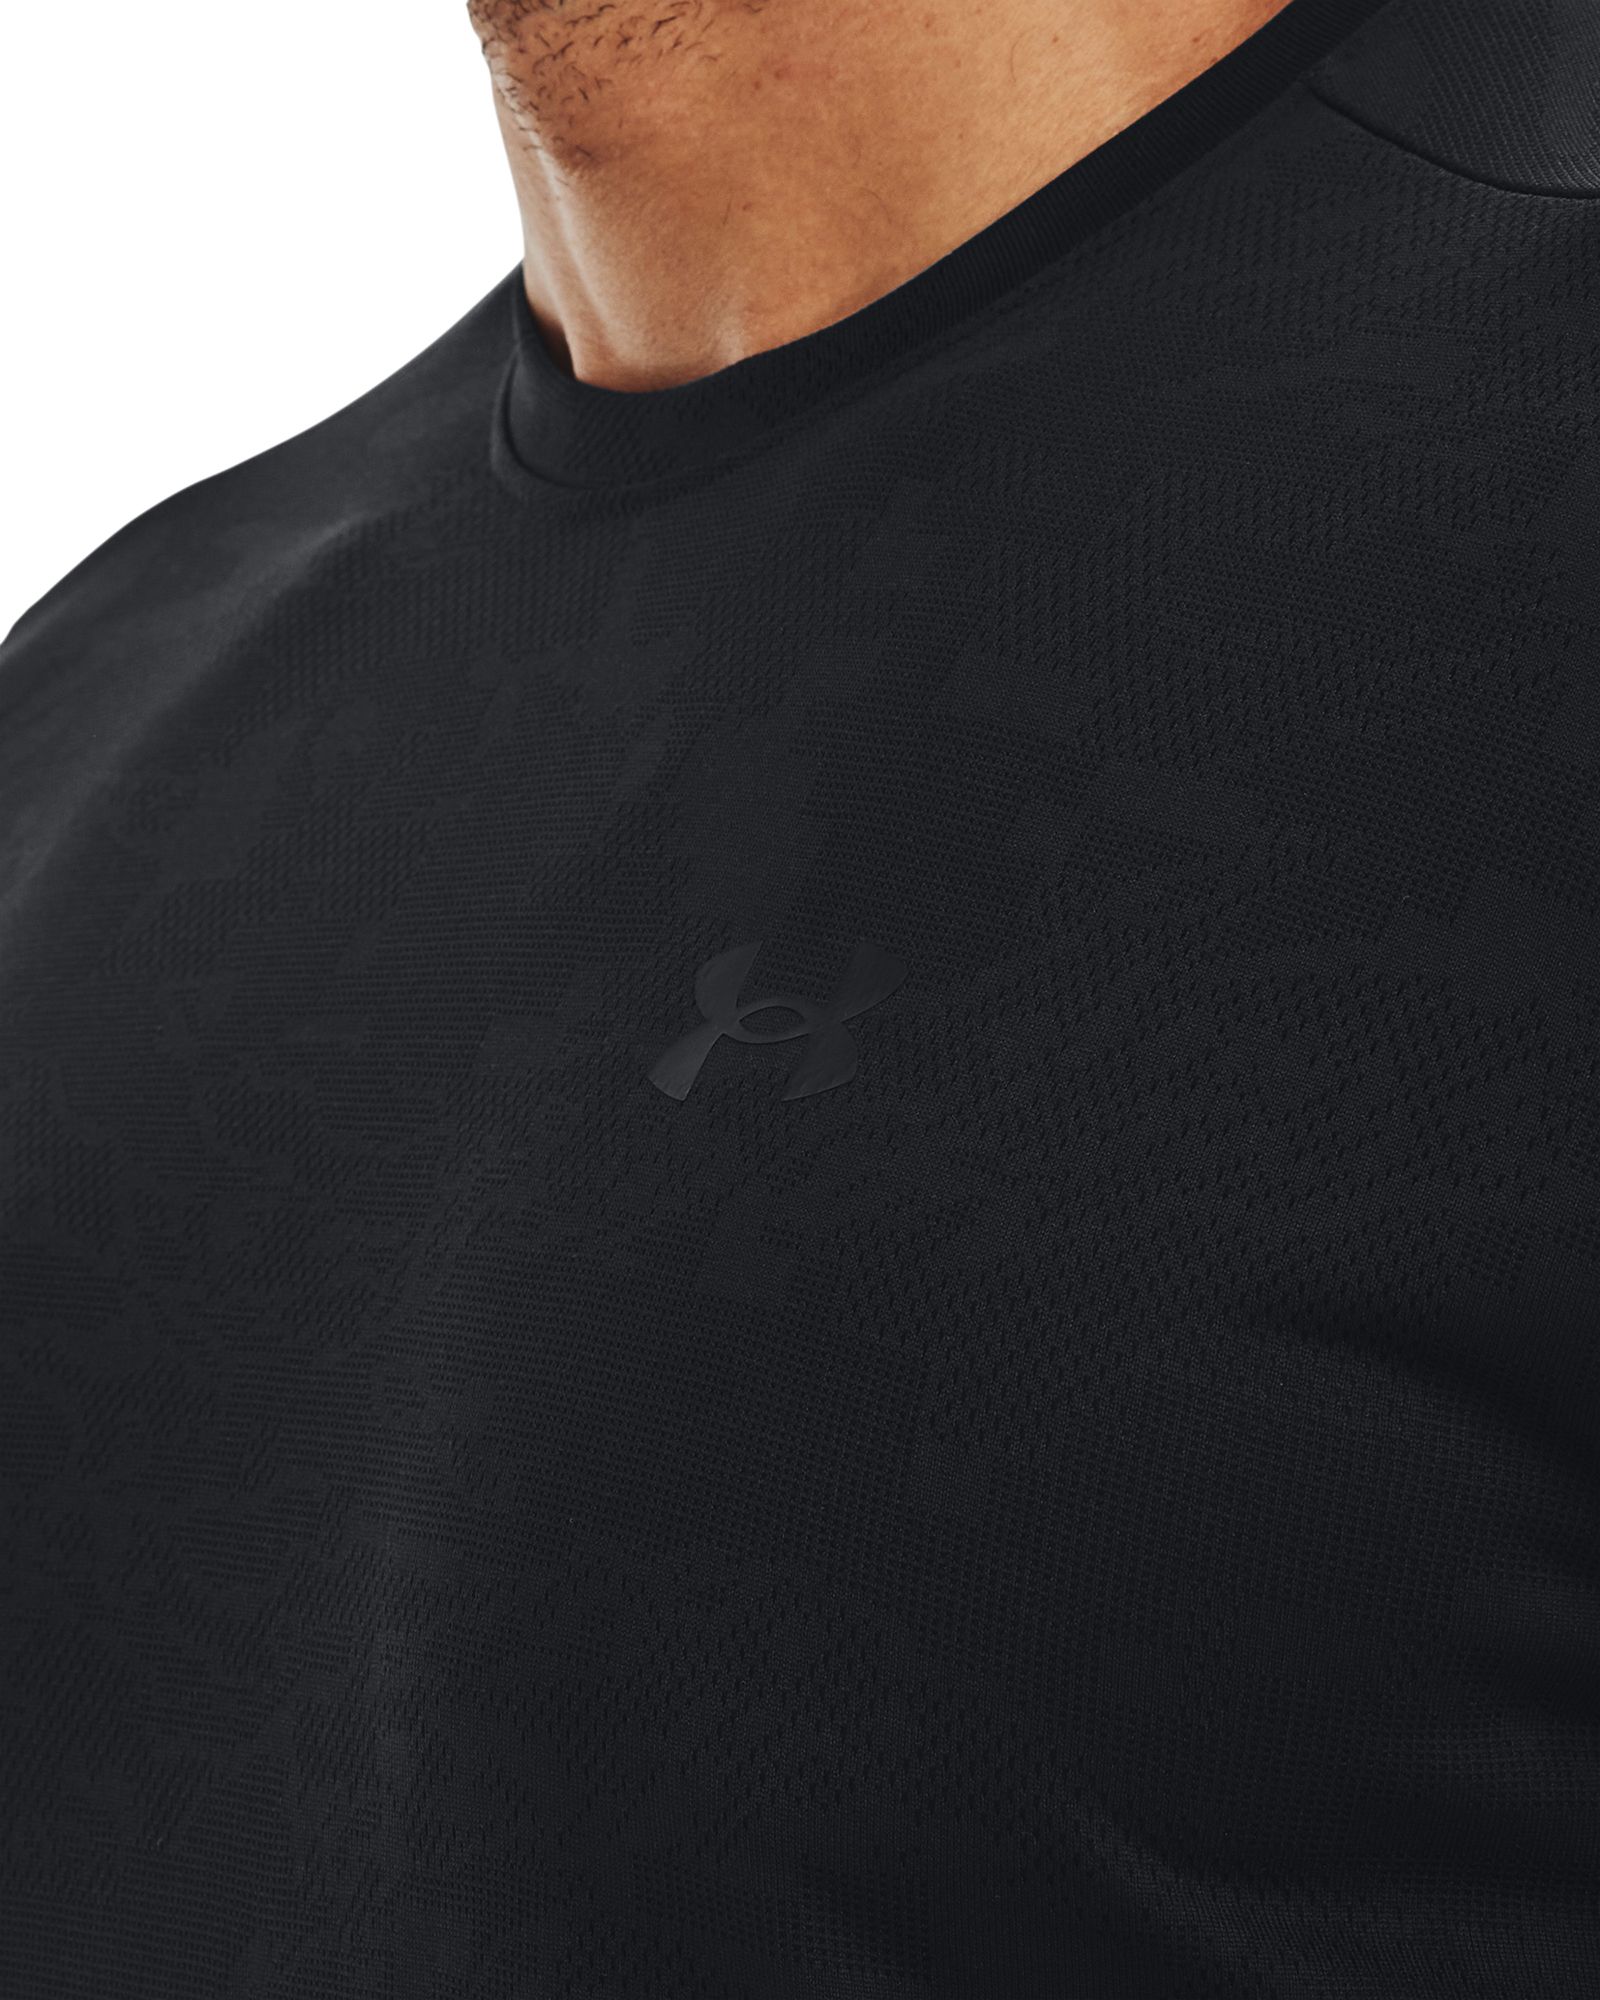 Under Armour Men's UA Tech Vent Jacquard Short-Sleeve T-Shirt